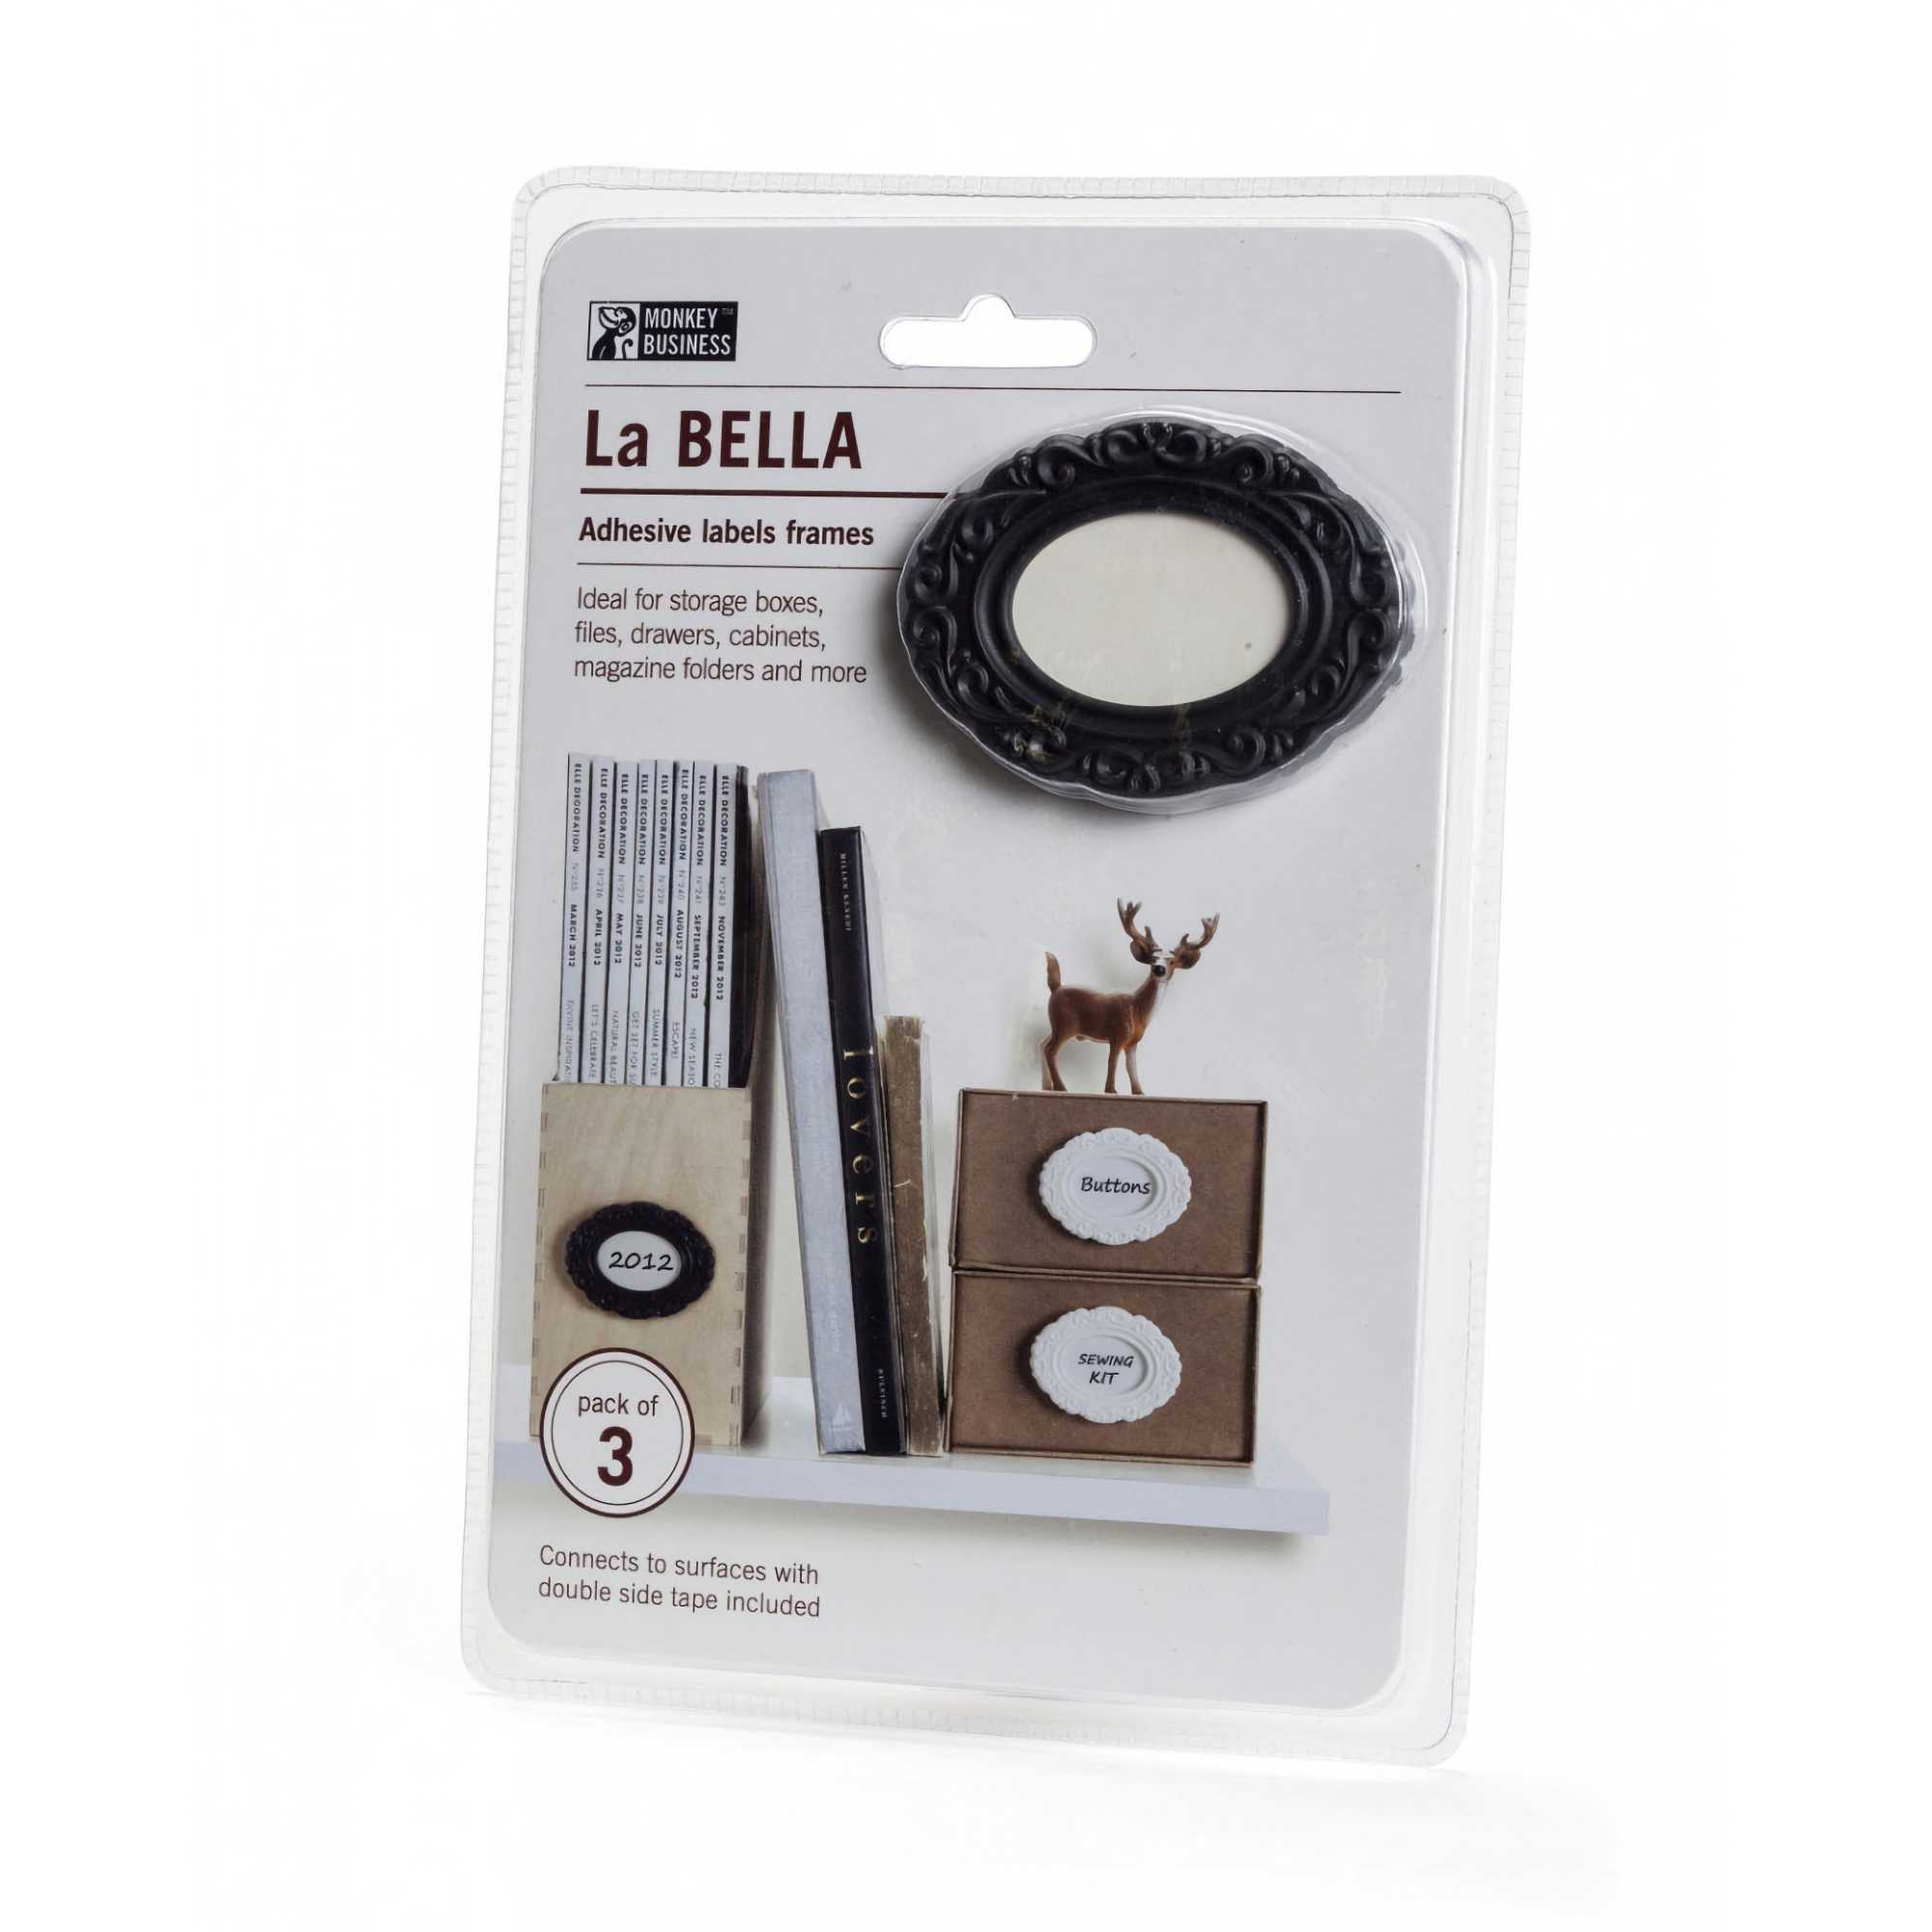 Monkey Business La Bella Adhesive Label Frames, Black